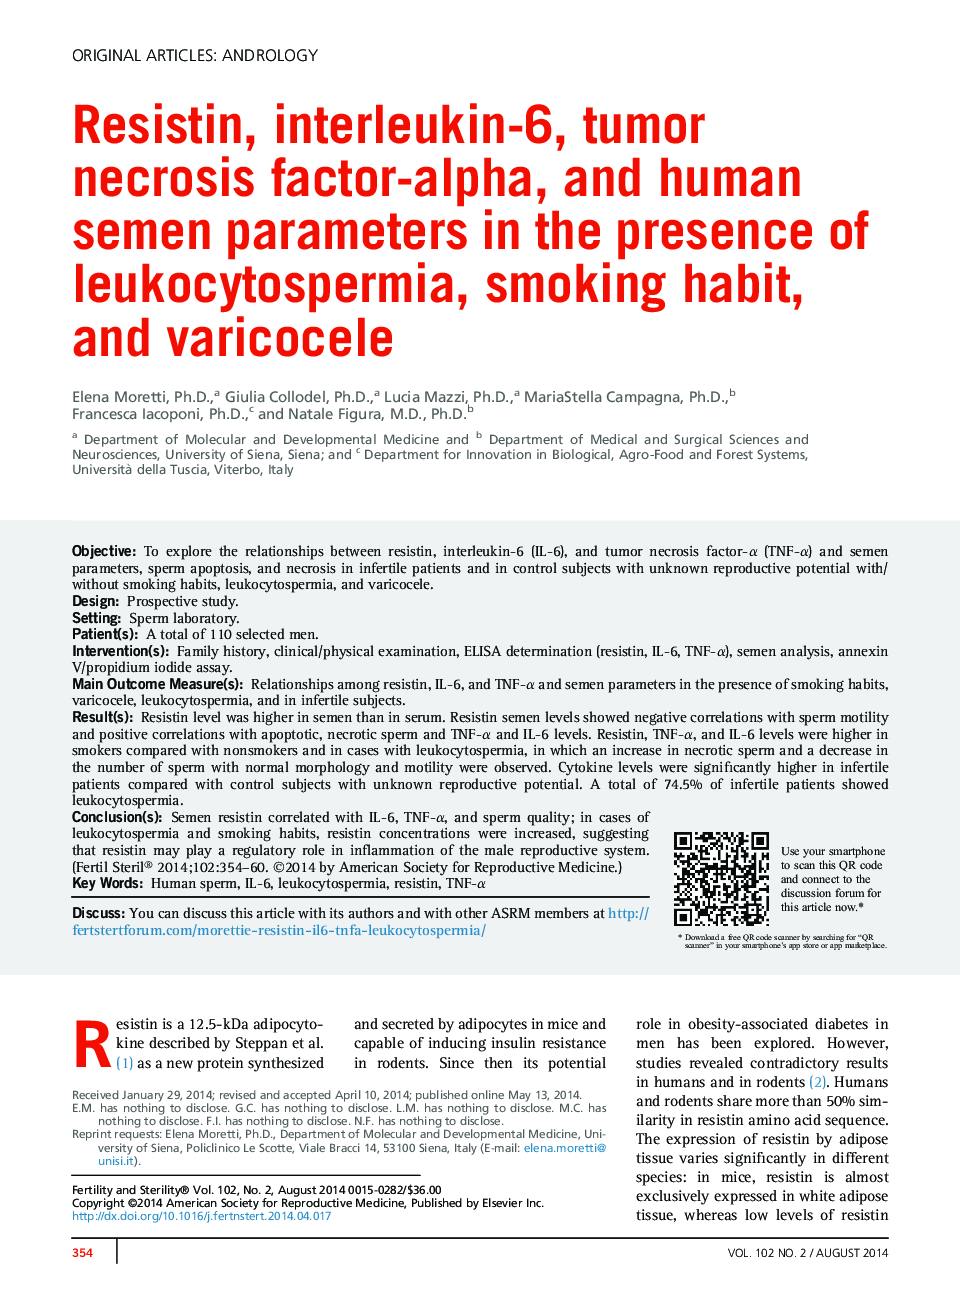 Resistin, interleukin-6, tumor necrosis factor-alpha, and human semen parameters in the presence of leukocytospermia, smoking habit, and varicocele